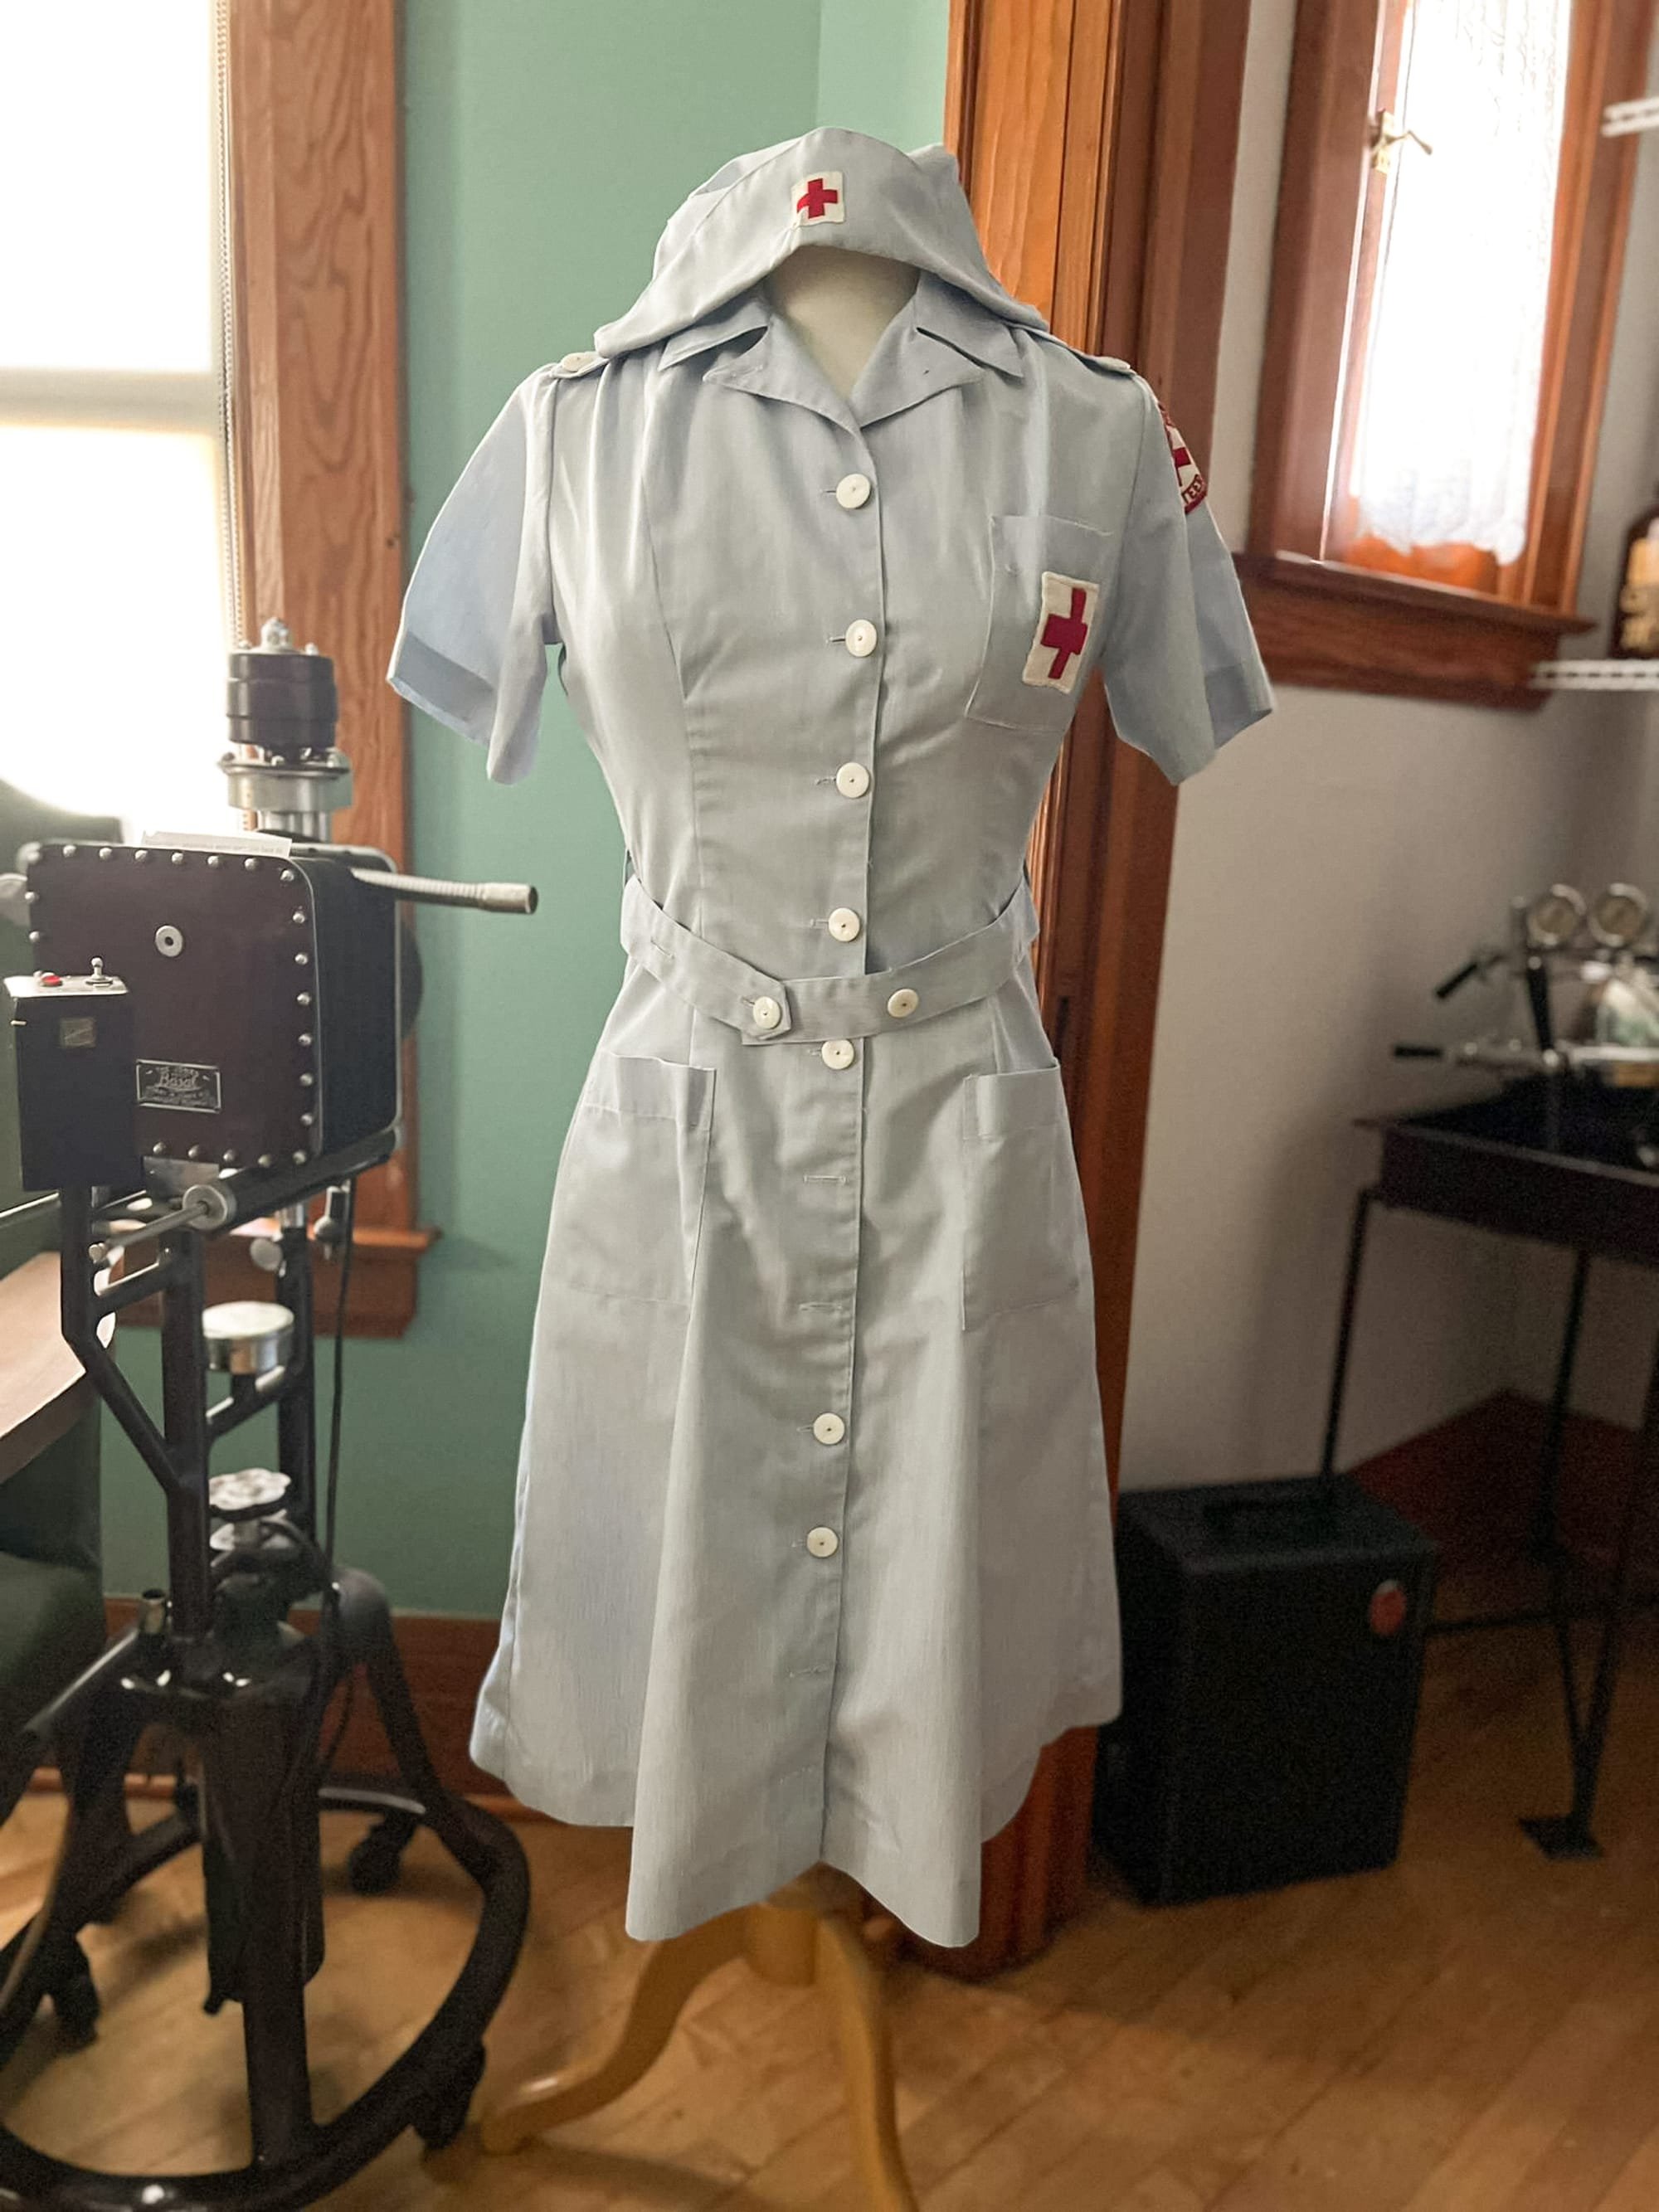 Red Cross Volunteer uniform from the 1940's.